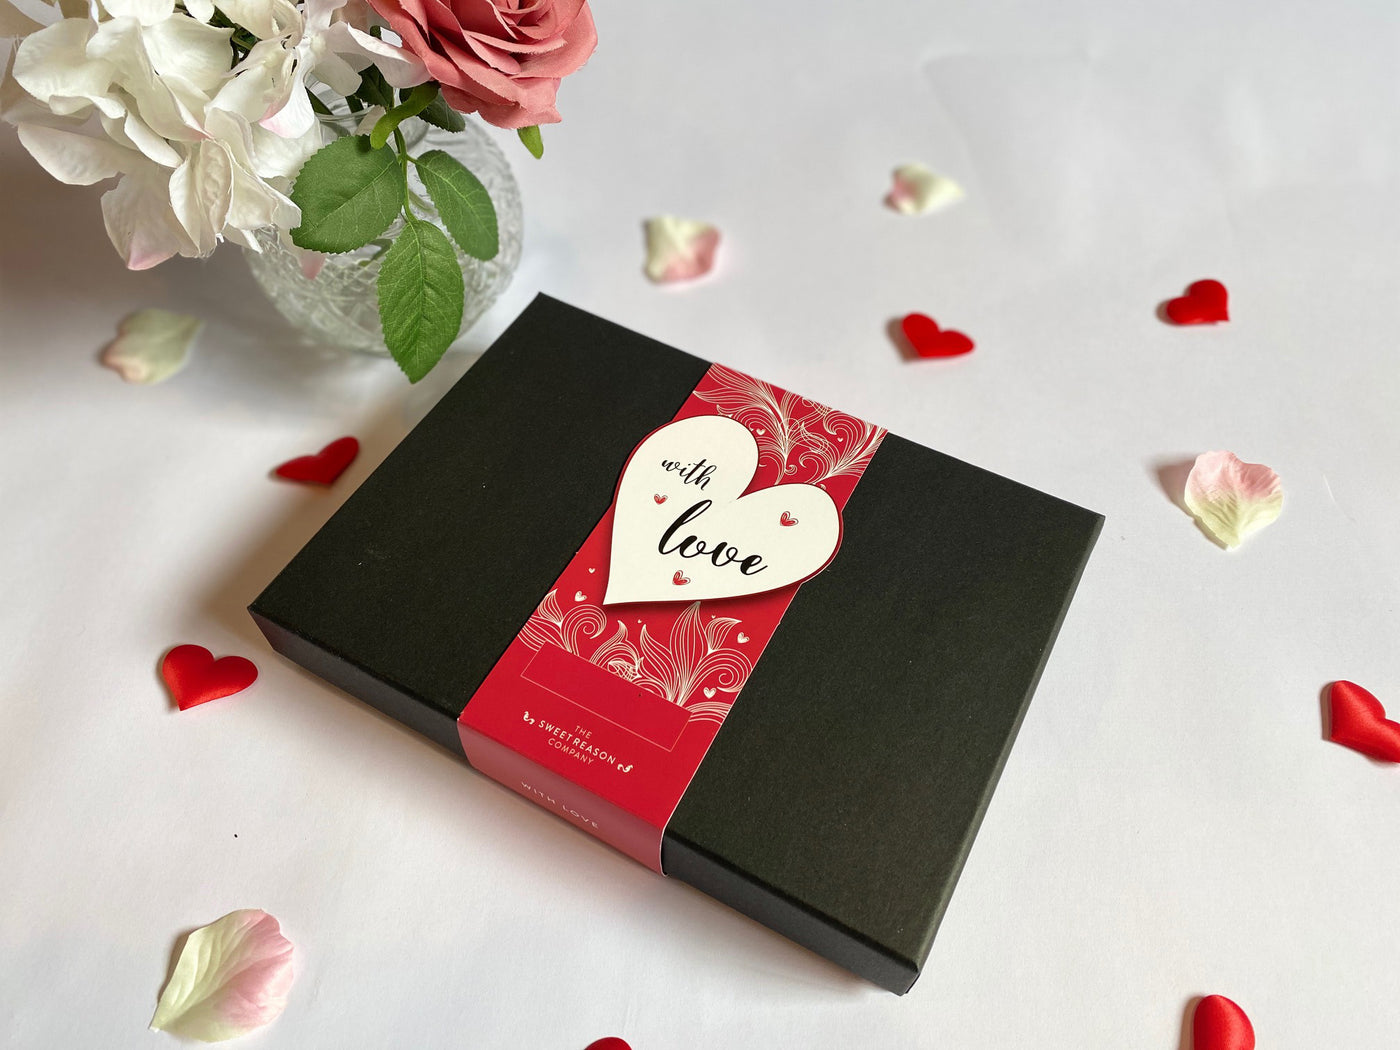 'Love Bites' Ultimate Brownie Gift